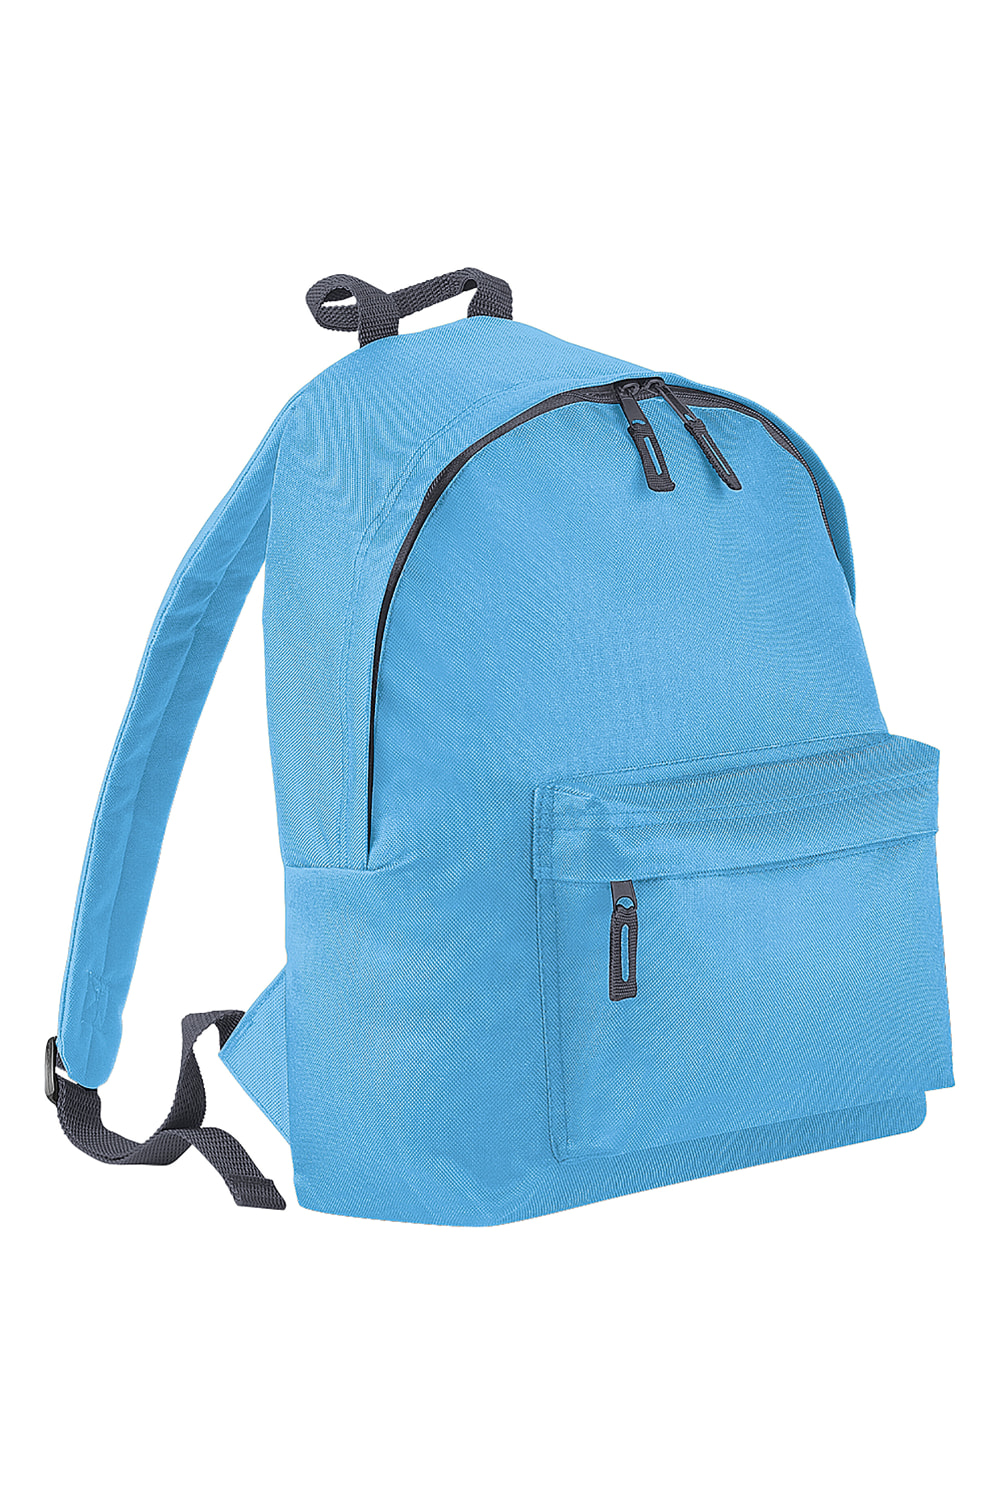 Rucksack Fashion Backpack, 18 Liters - Surf Blue/ Graphite Gray